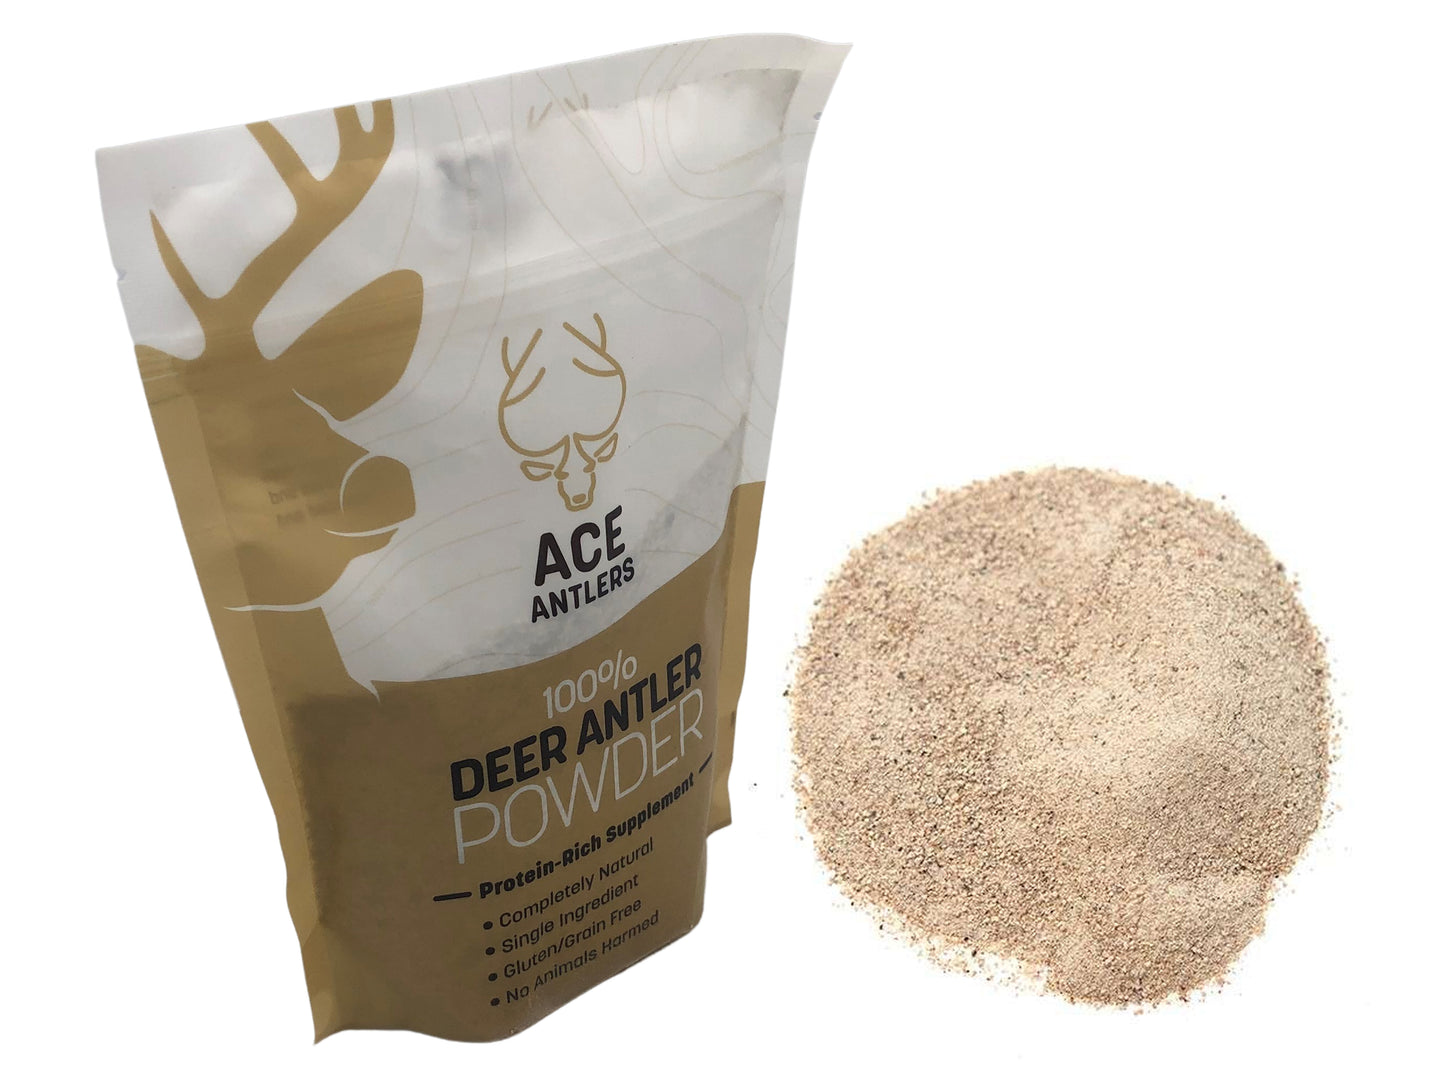 ace antlers deer antler powder for dogs